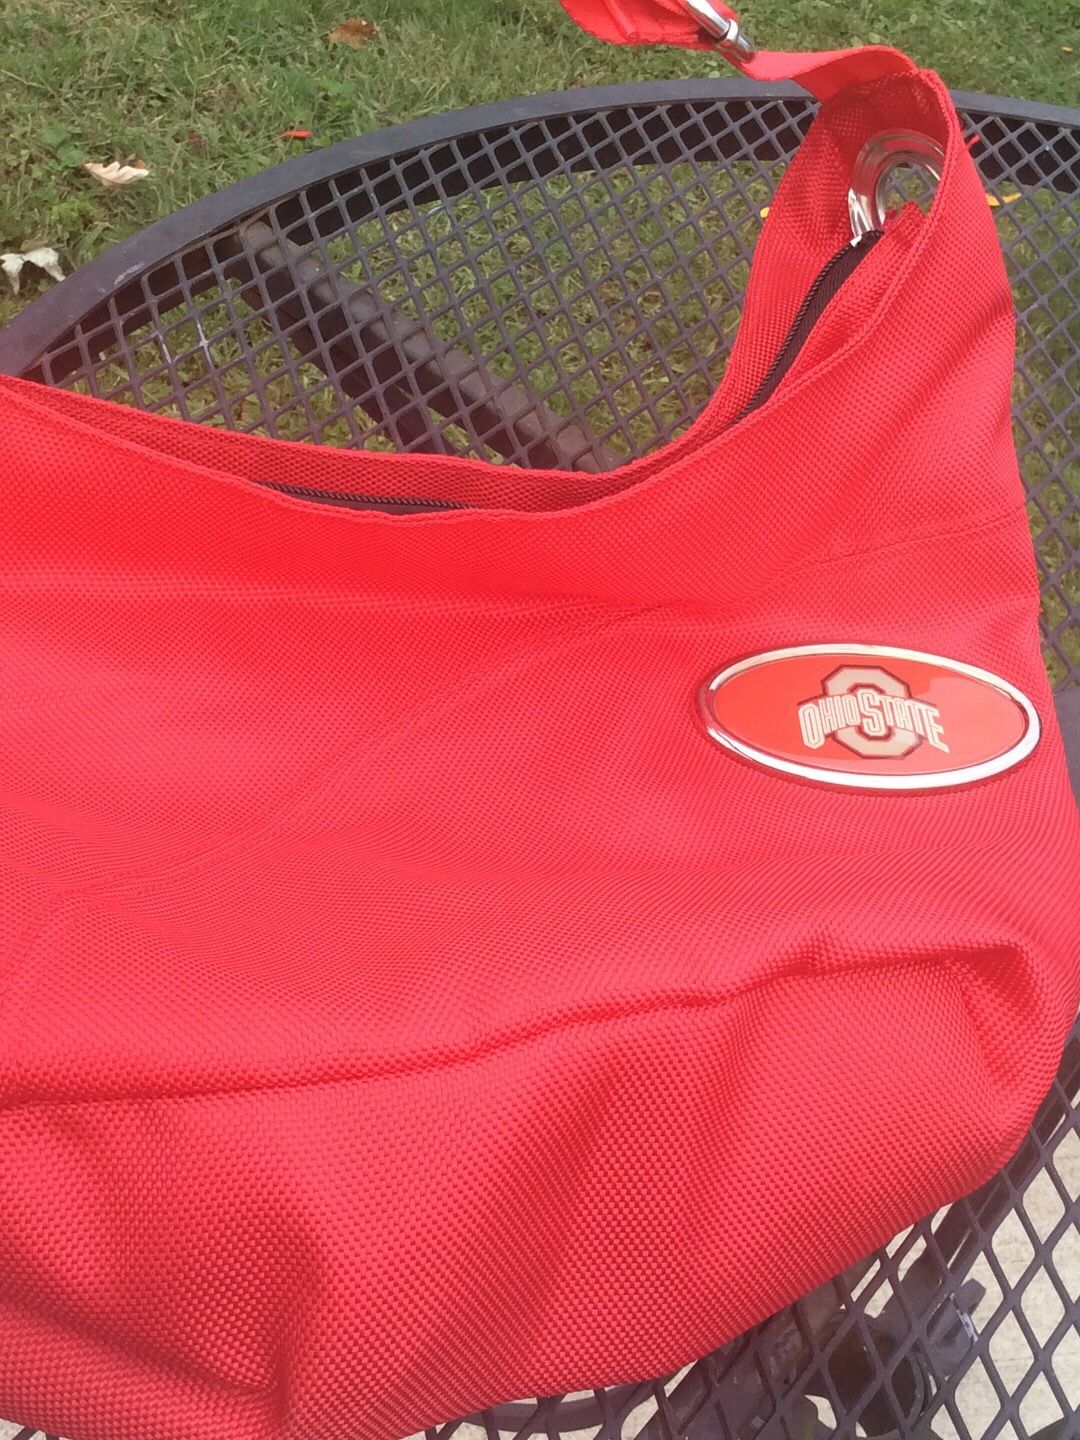 OSU Ohio state red hobo purse bag. Pick up in Whitehall. $15